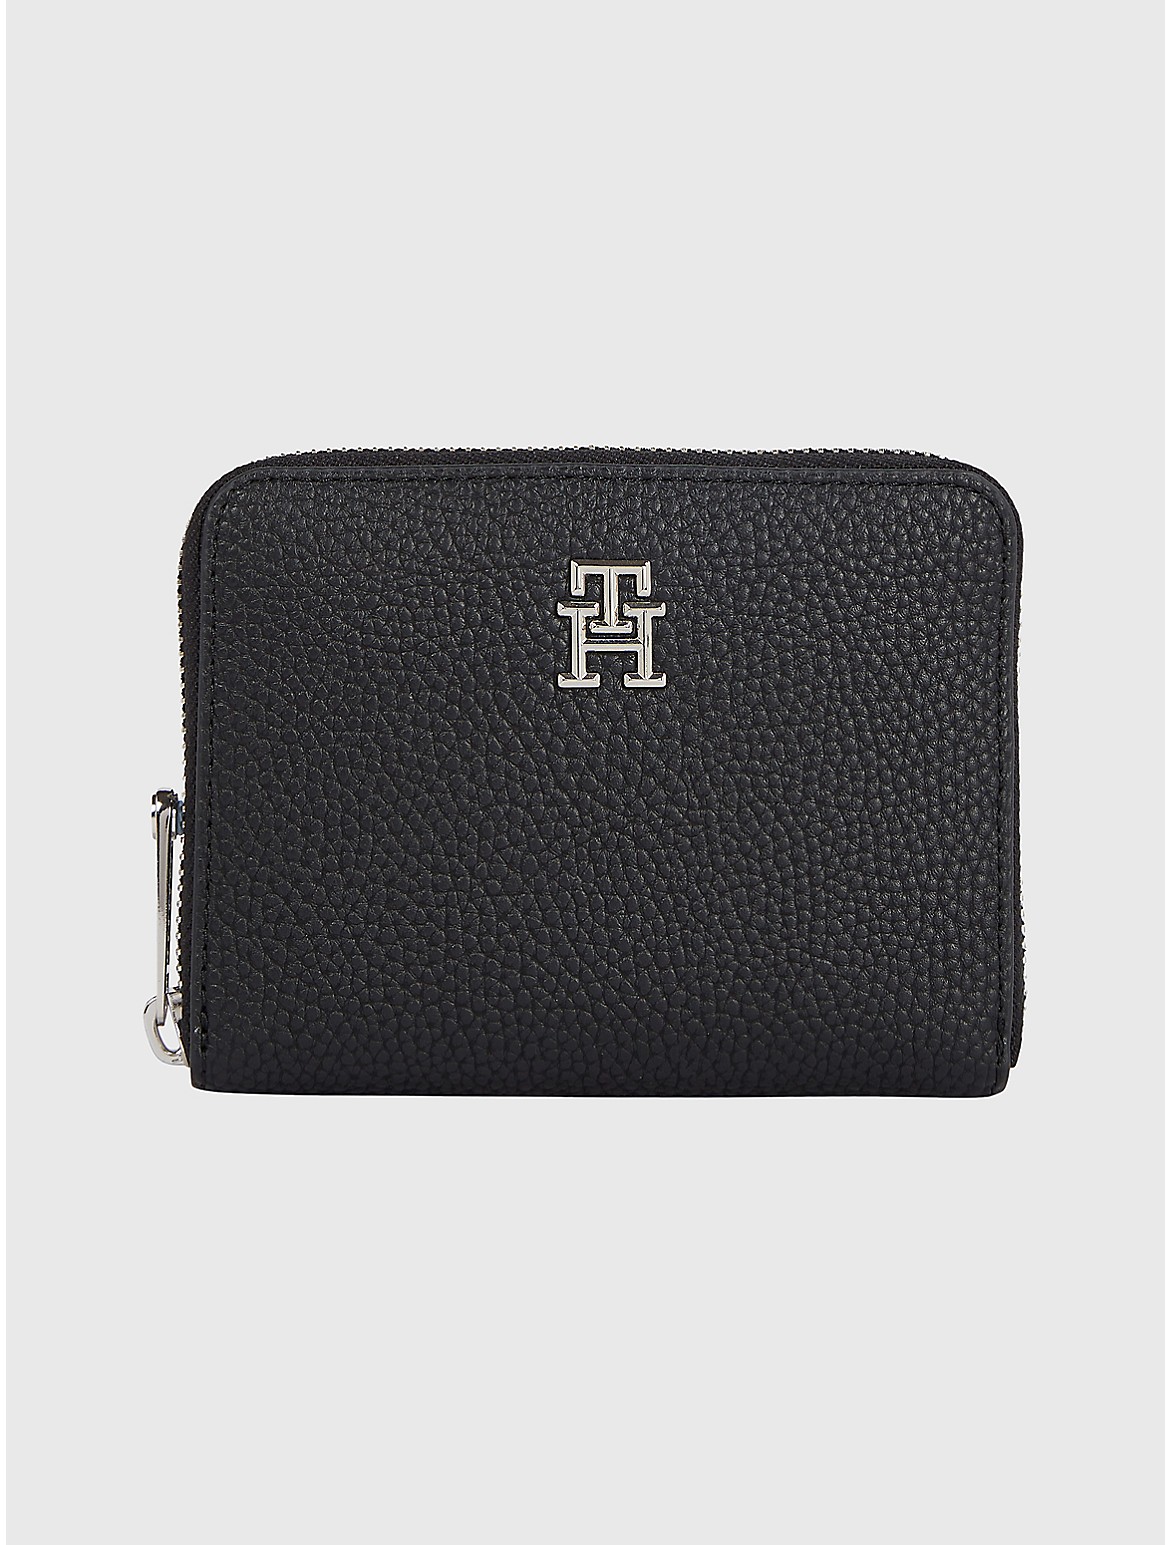 Tommy Hilfiger Women's TH Medium Zip Wallet - Black